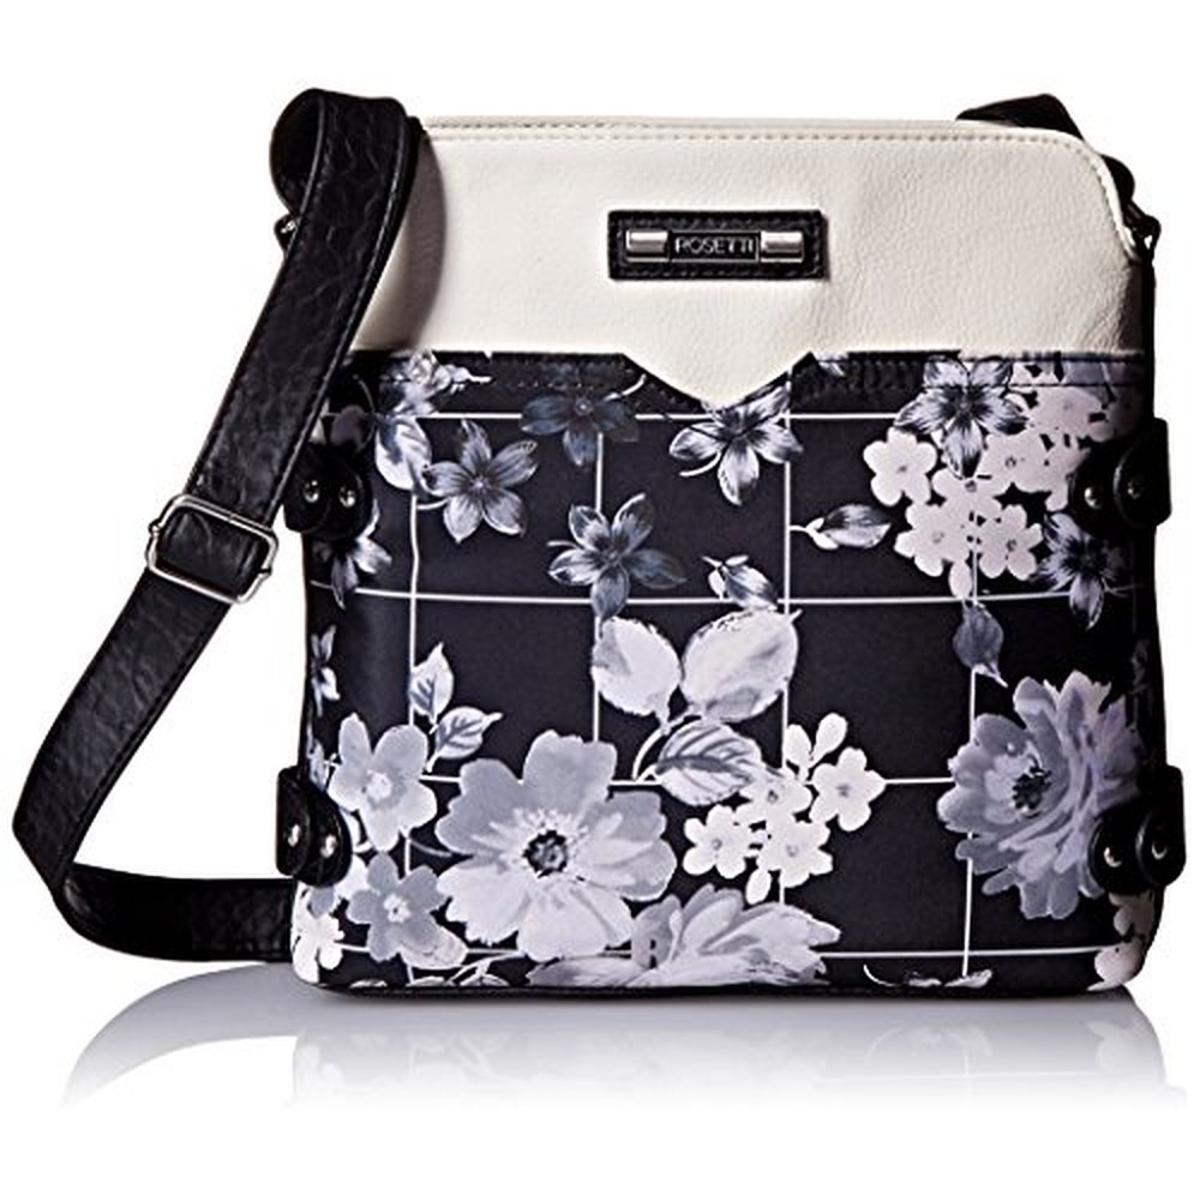 Rosetti 8389 Womens Annette Faux Leather Colorblock Crossbody Handbag Purse BHFO | eBay